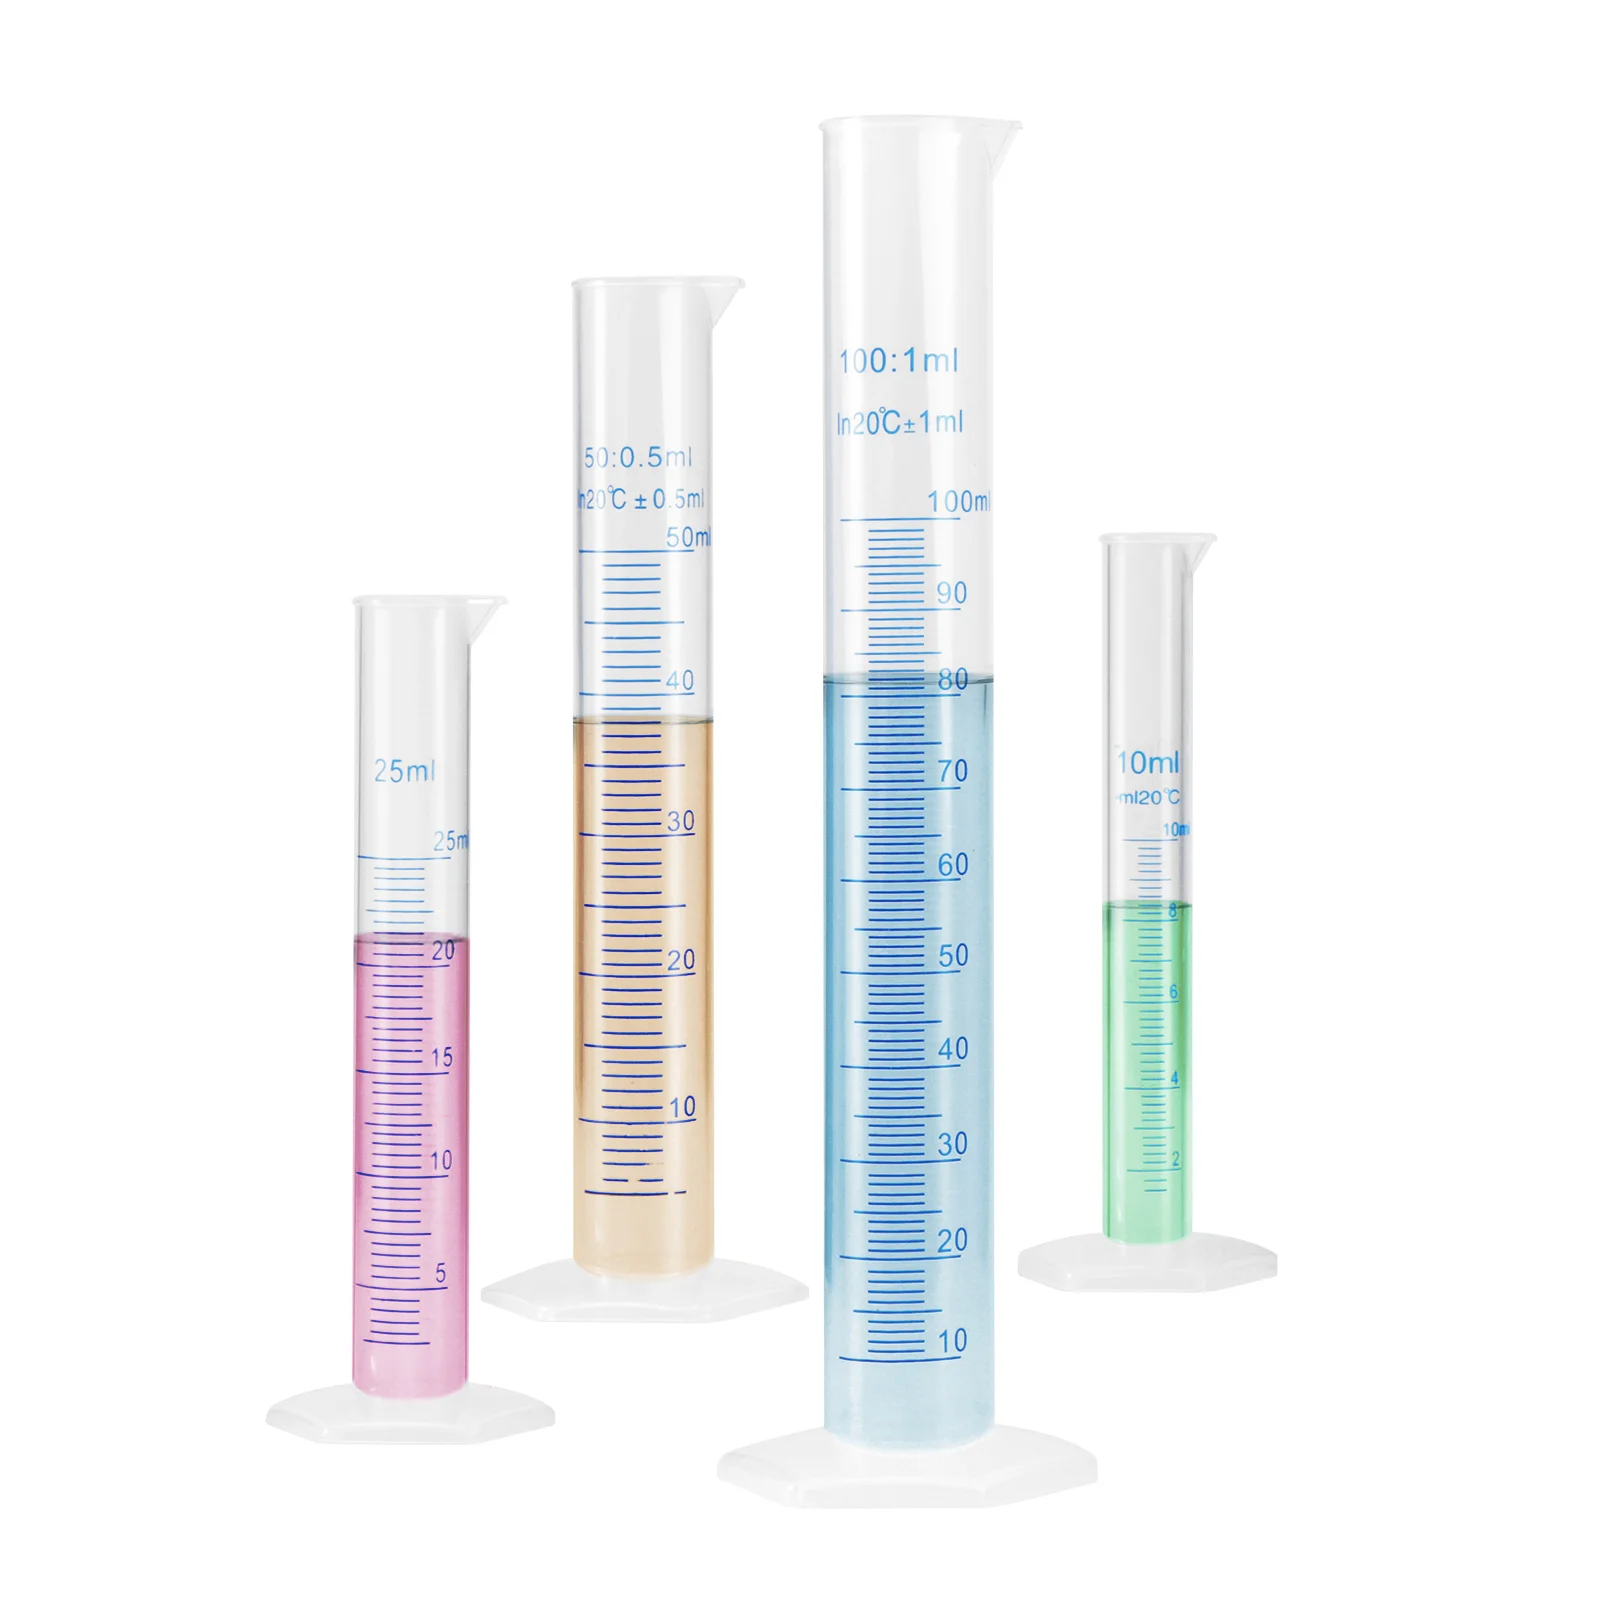 

Beavorty Glass Test Tubes 4Pcs Plastic Graduated Cylinder Transparent Measuring Cylinder Set